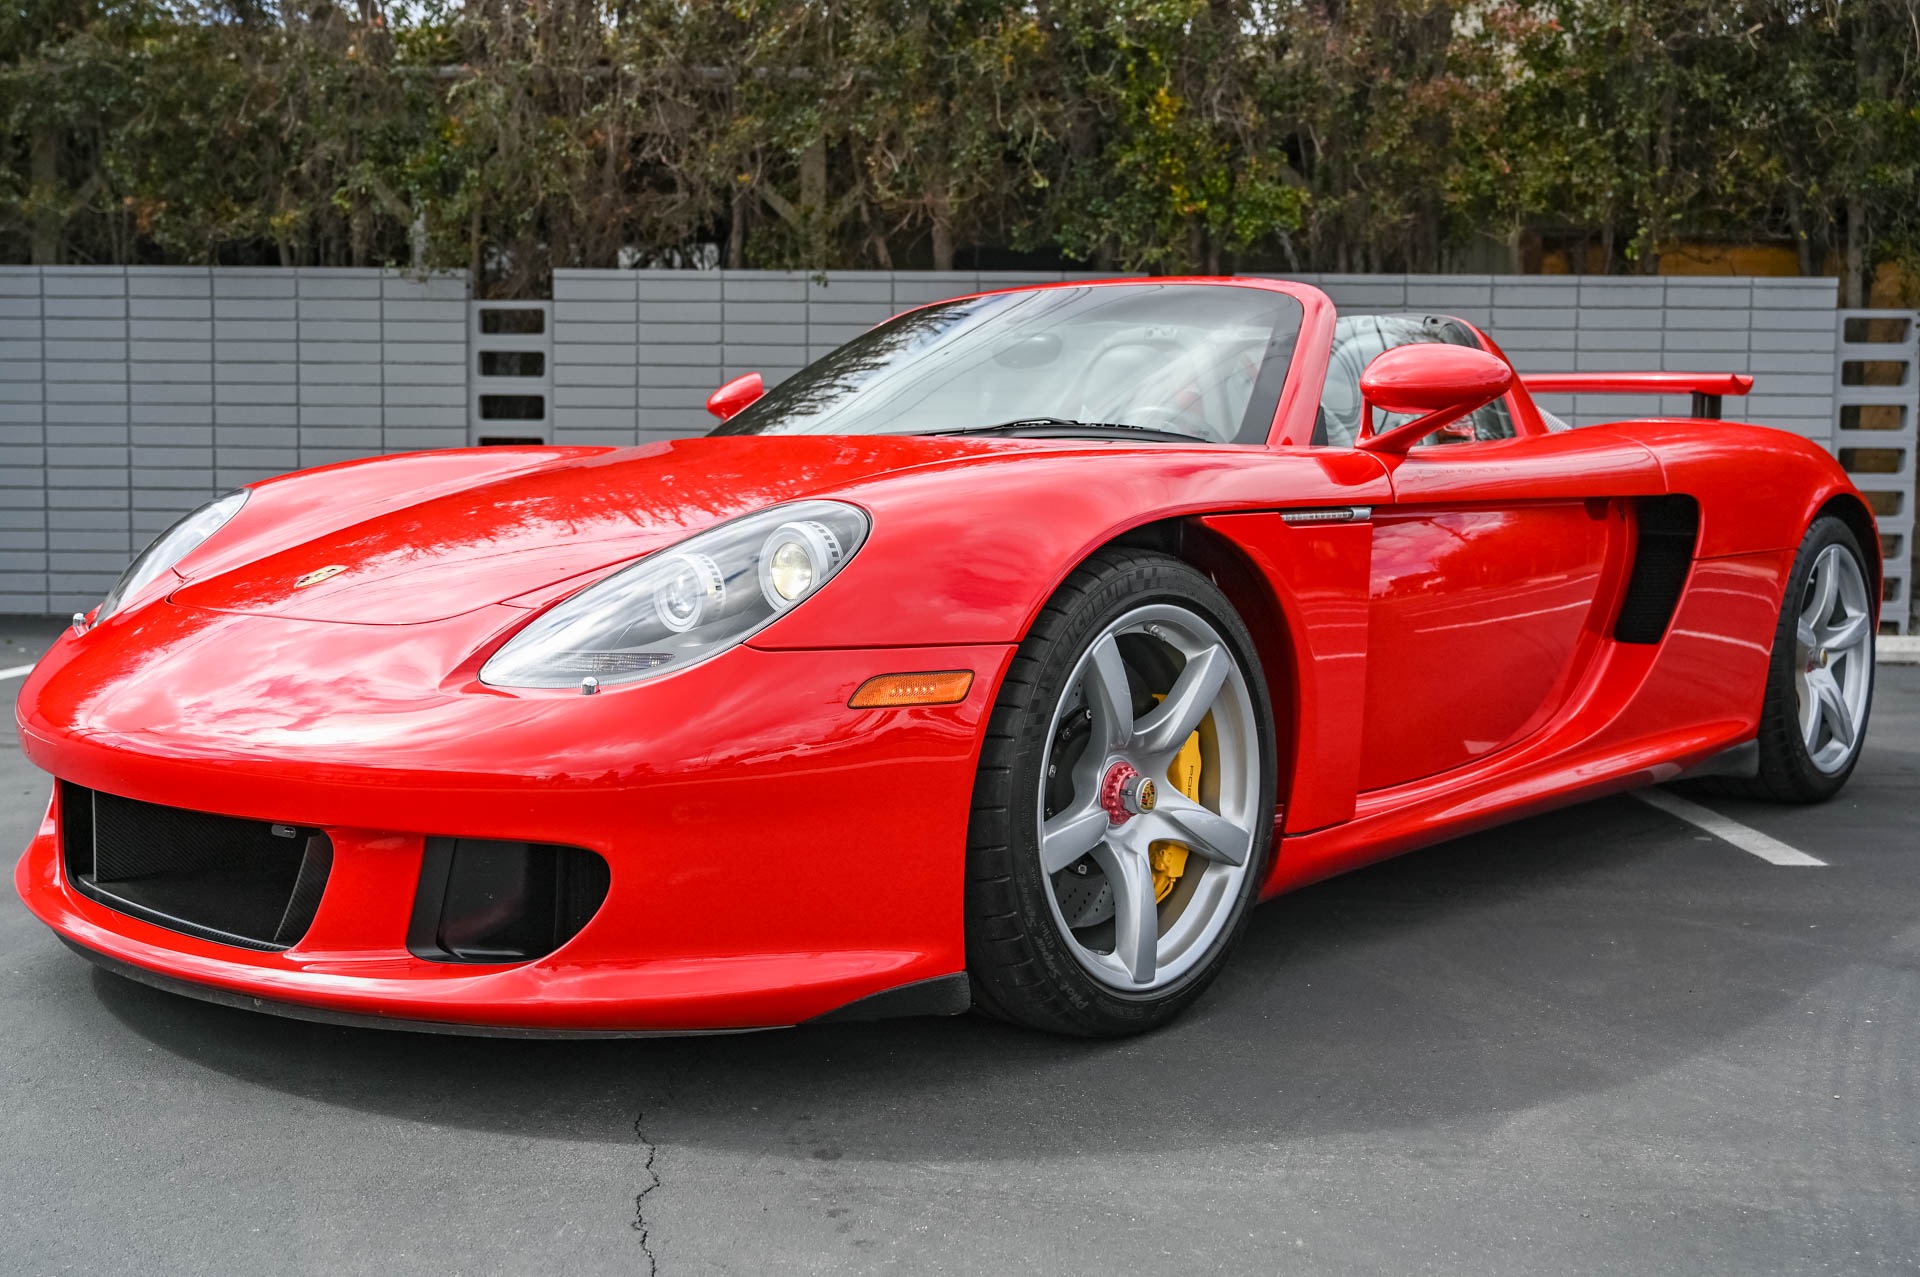 Used 2005 Porsche Carrera GT For Sale ($1,650,000) | iLusso Stock #001567